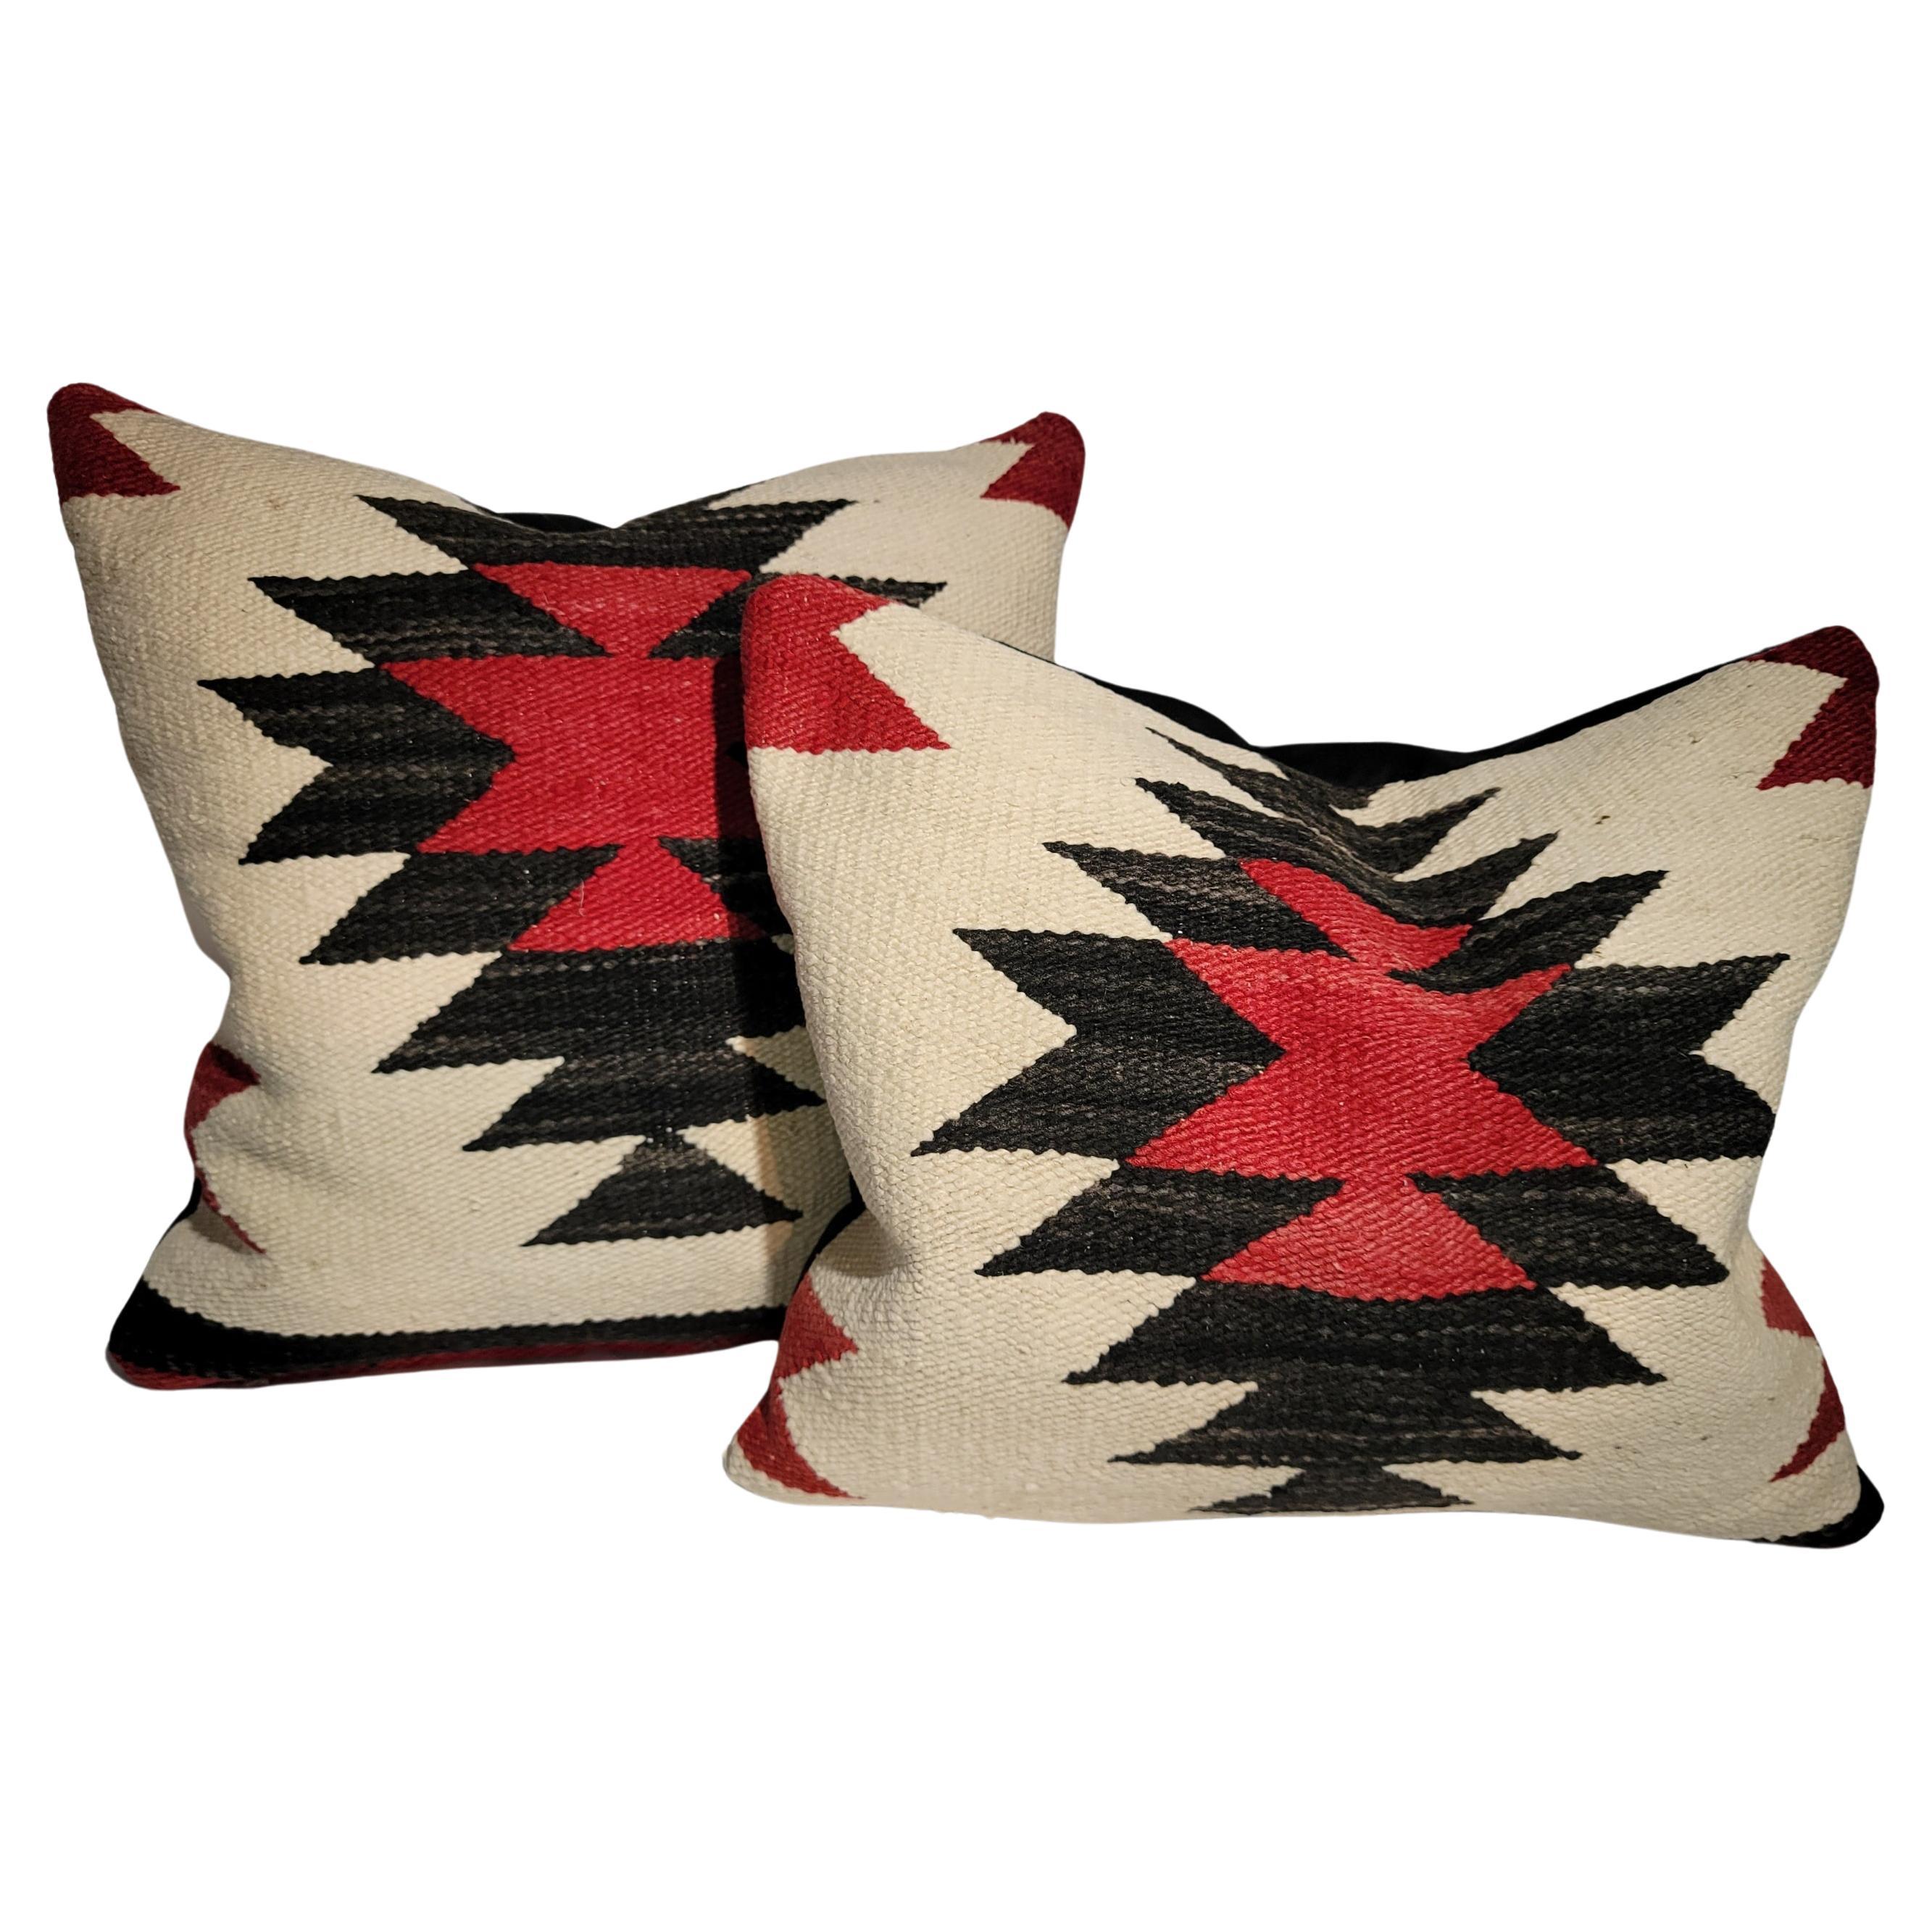 Navajo Indian Weaving Pillows-Pair